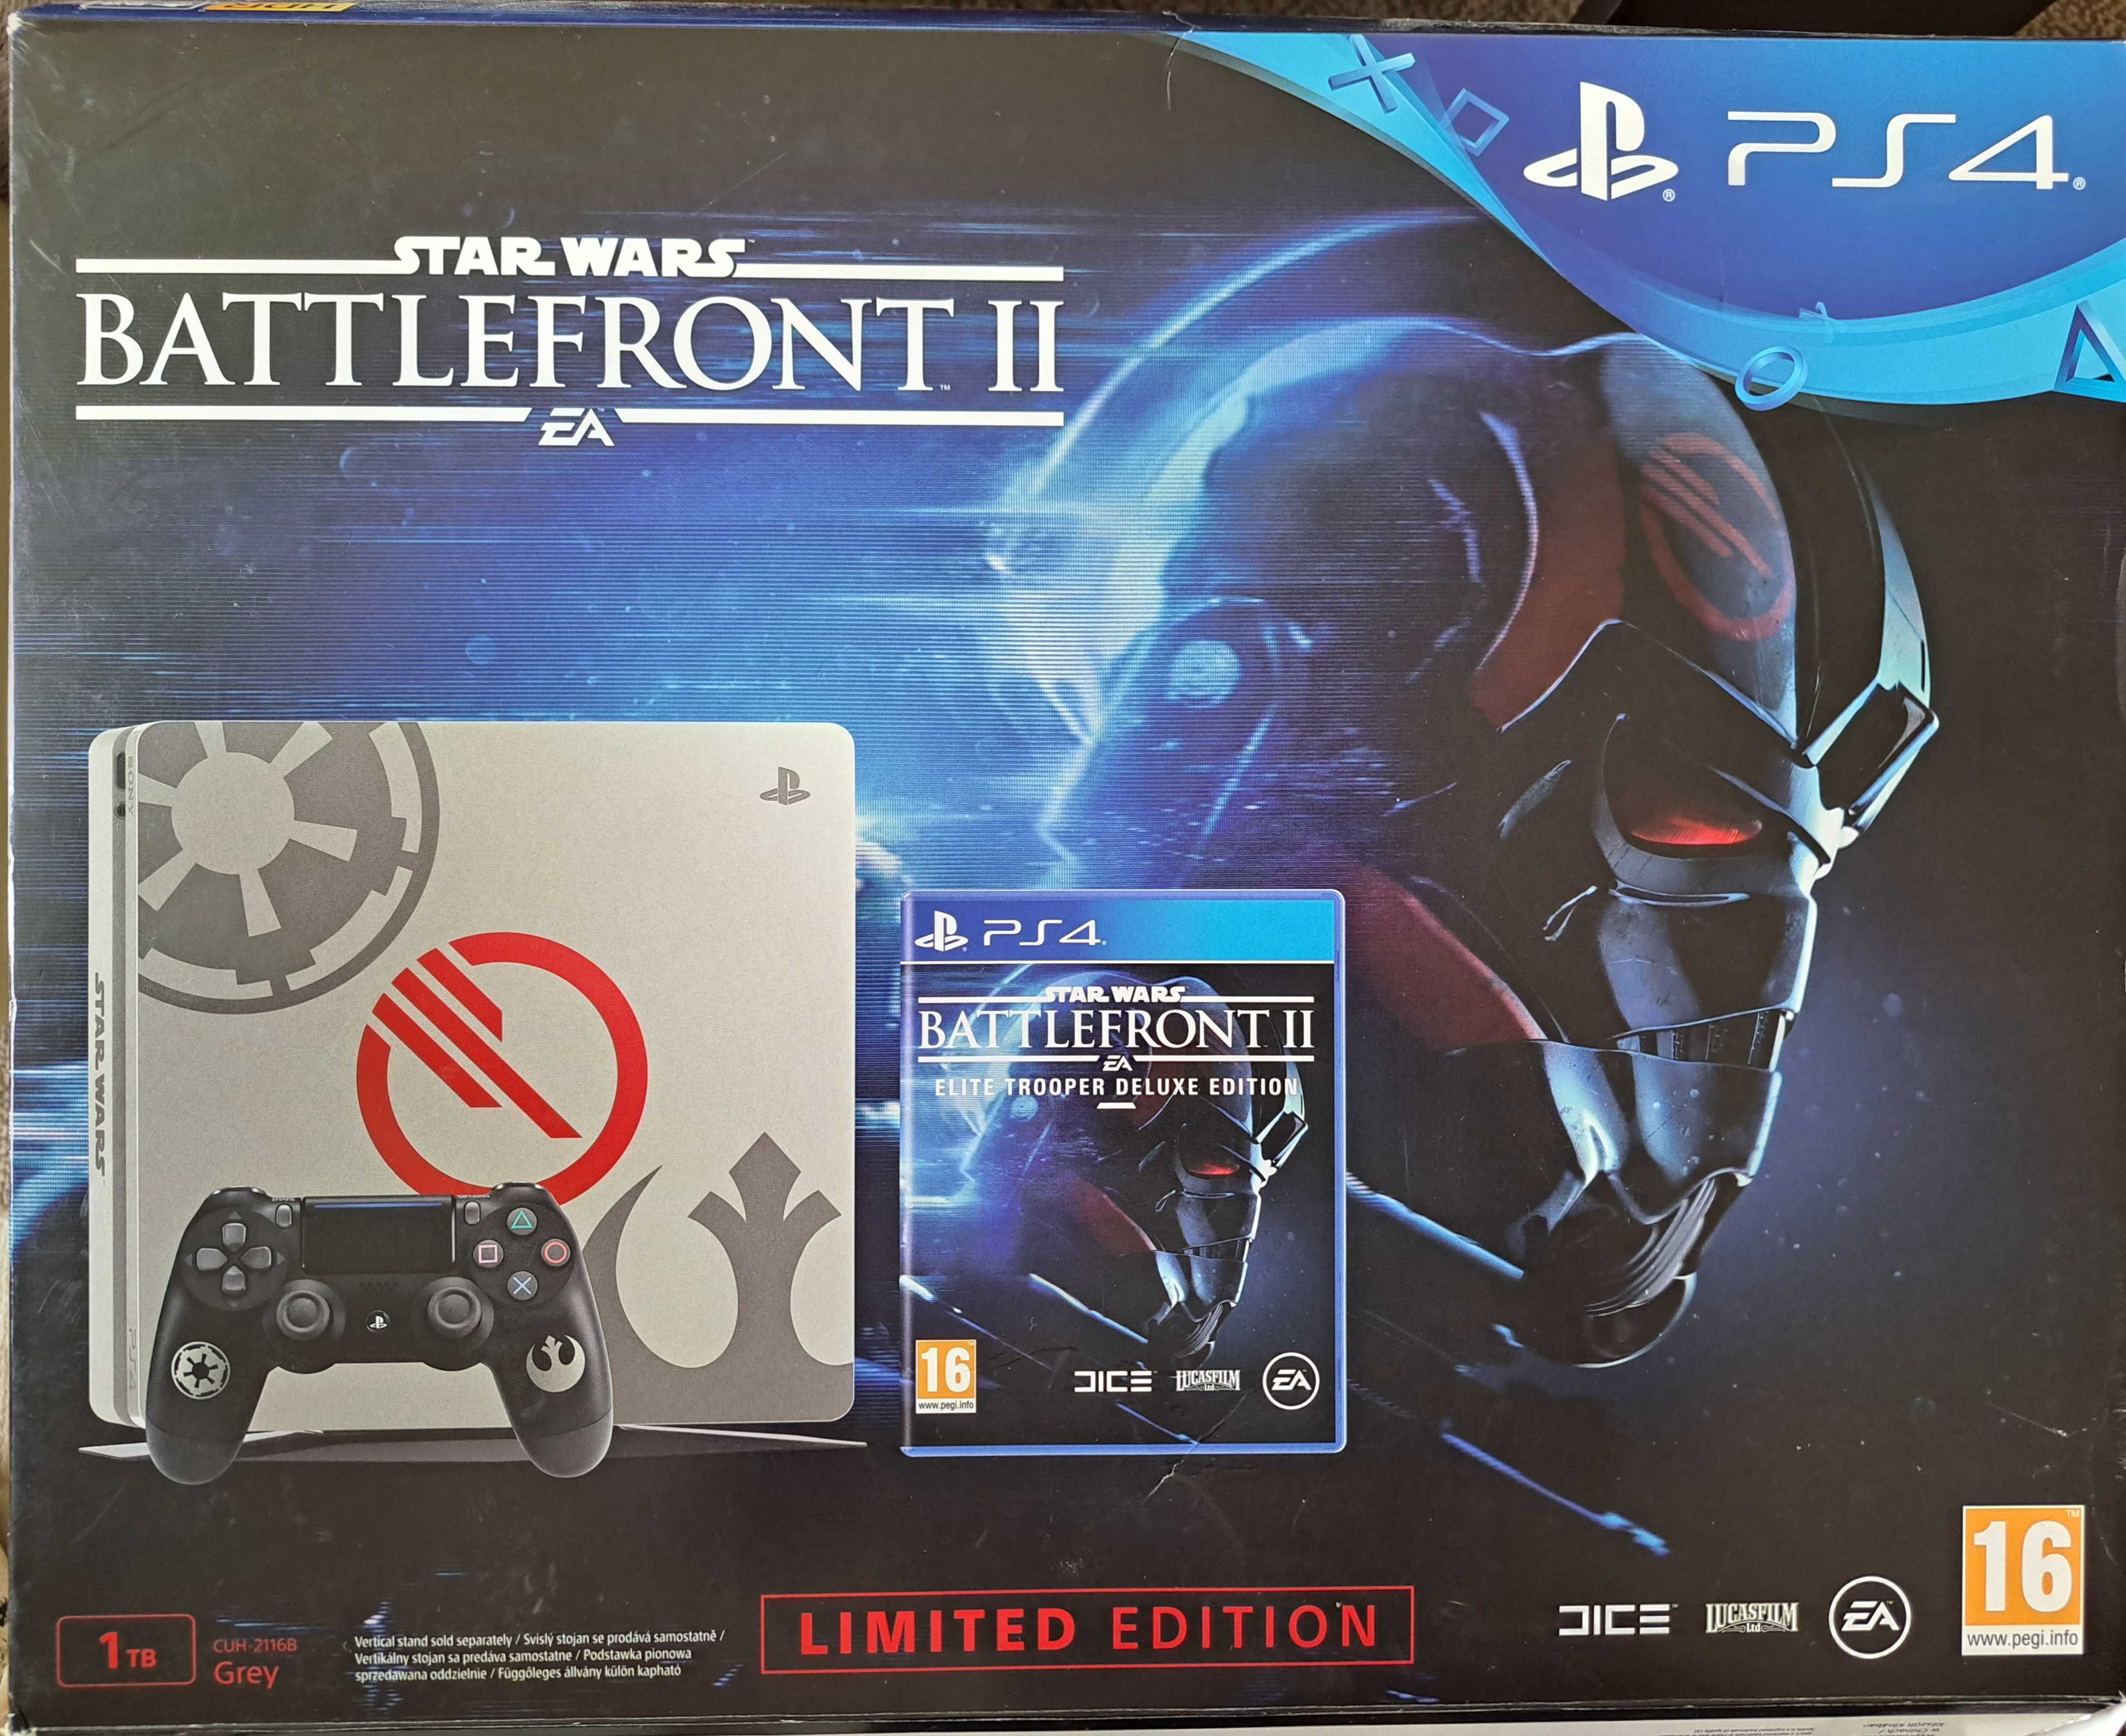 PlayStation 4 Slim 1TB PS4 Star Wars Limited Edition